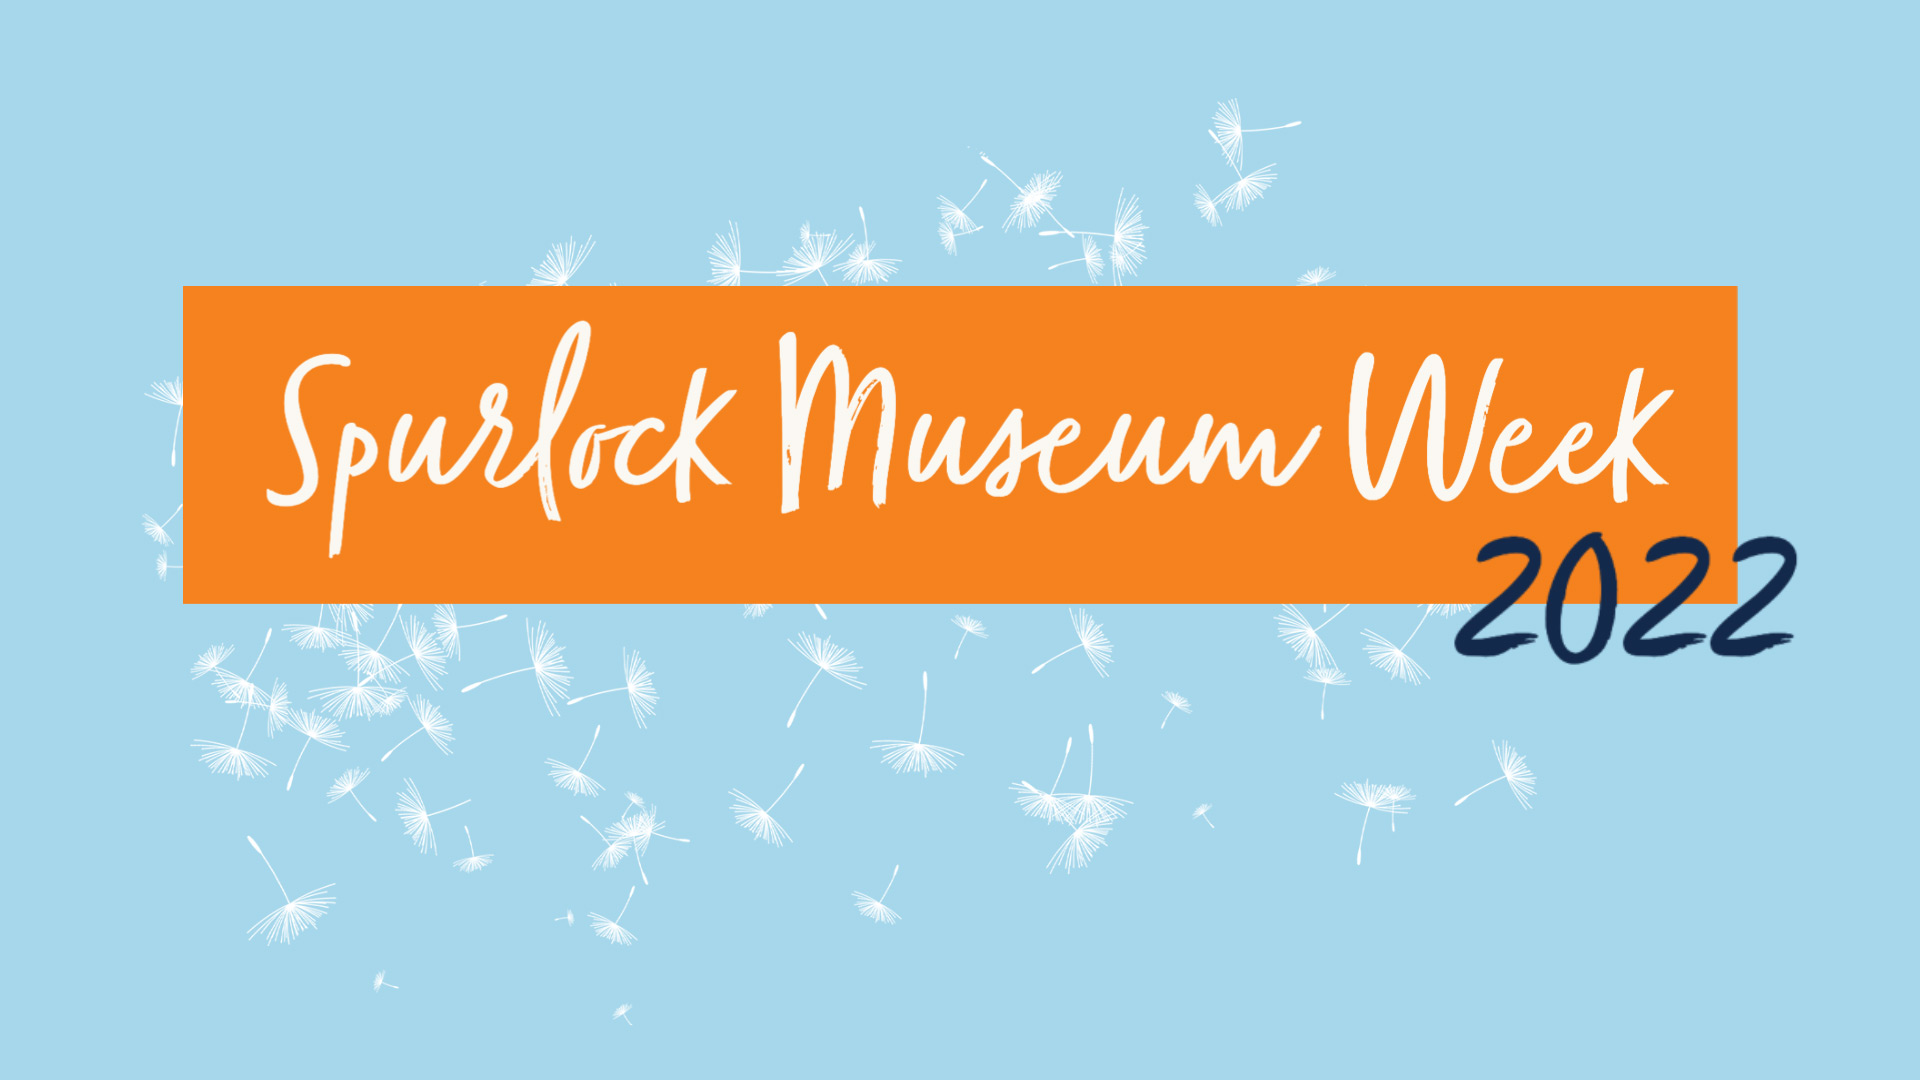 Spurlock Museum week 2022 title decorative image